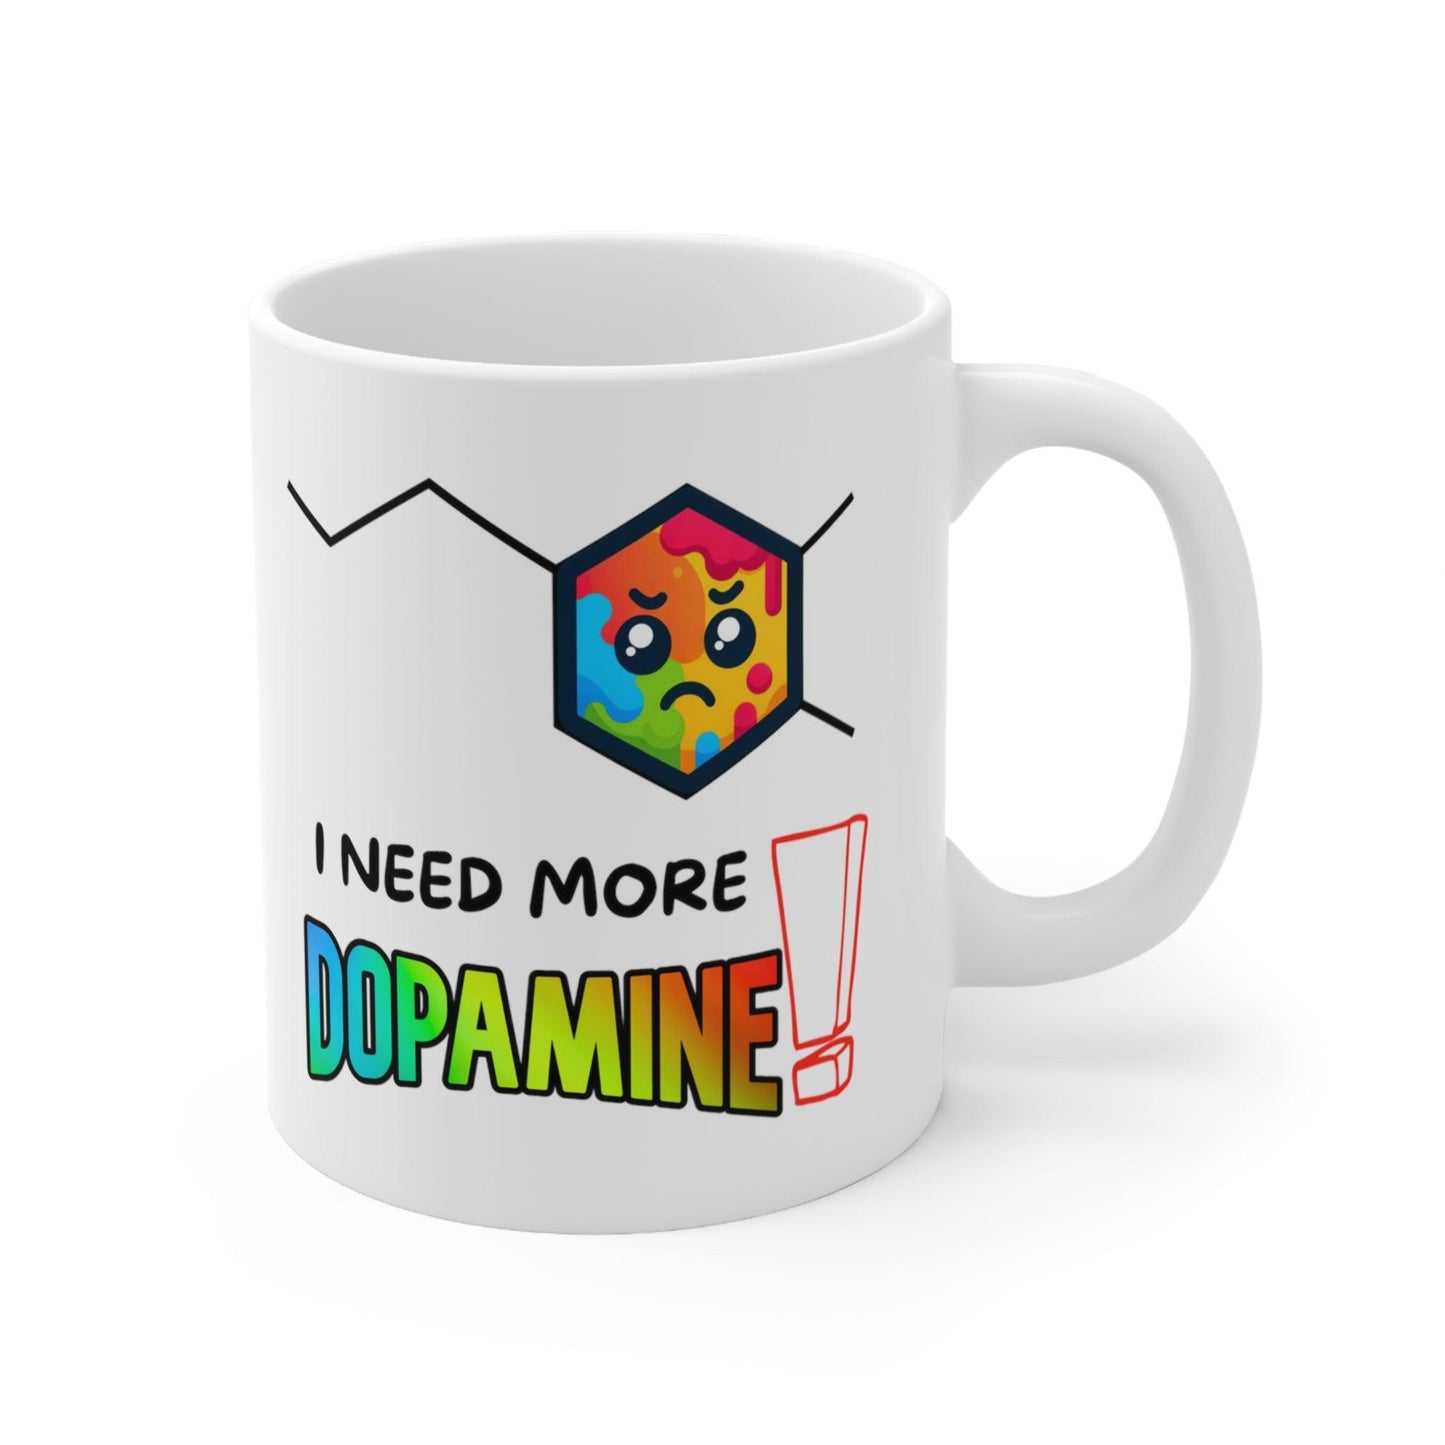 ADHD Dopamine Boost Mug - 'I Need More Dopamine' Humor - Neurodiversity Gift Cup - Fidget and Focus